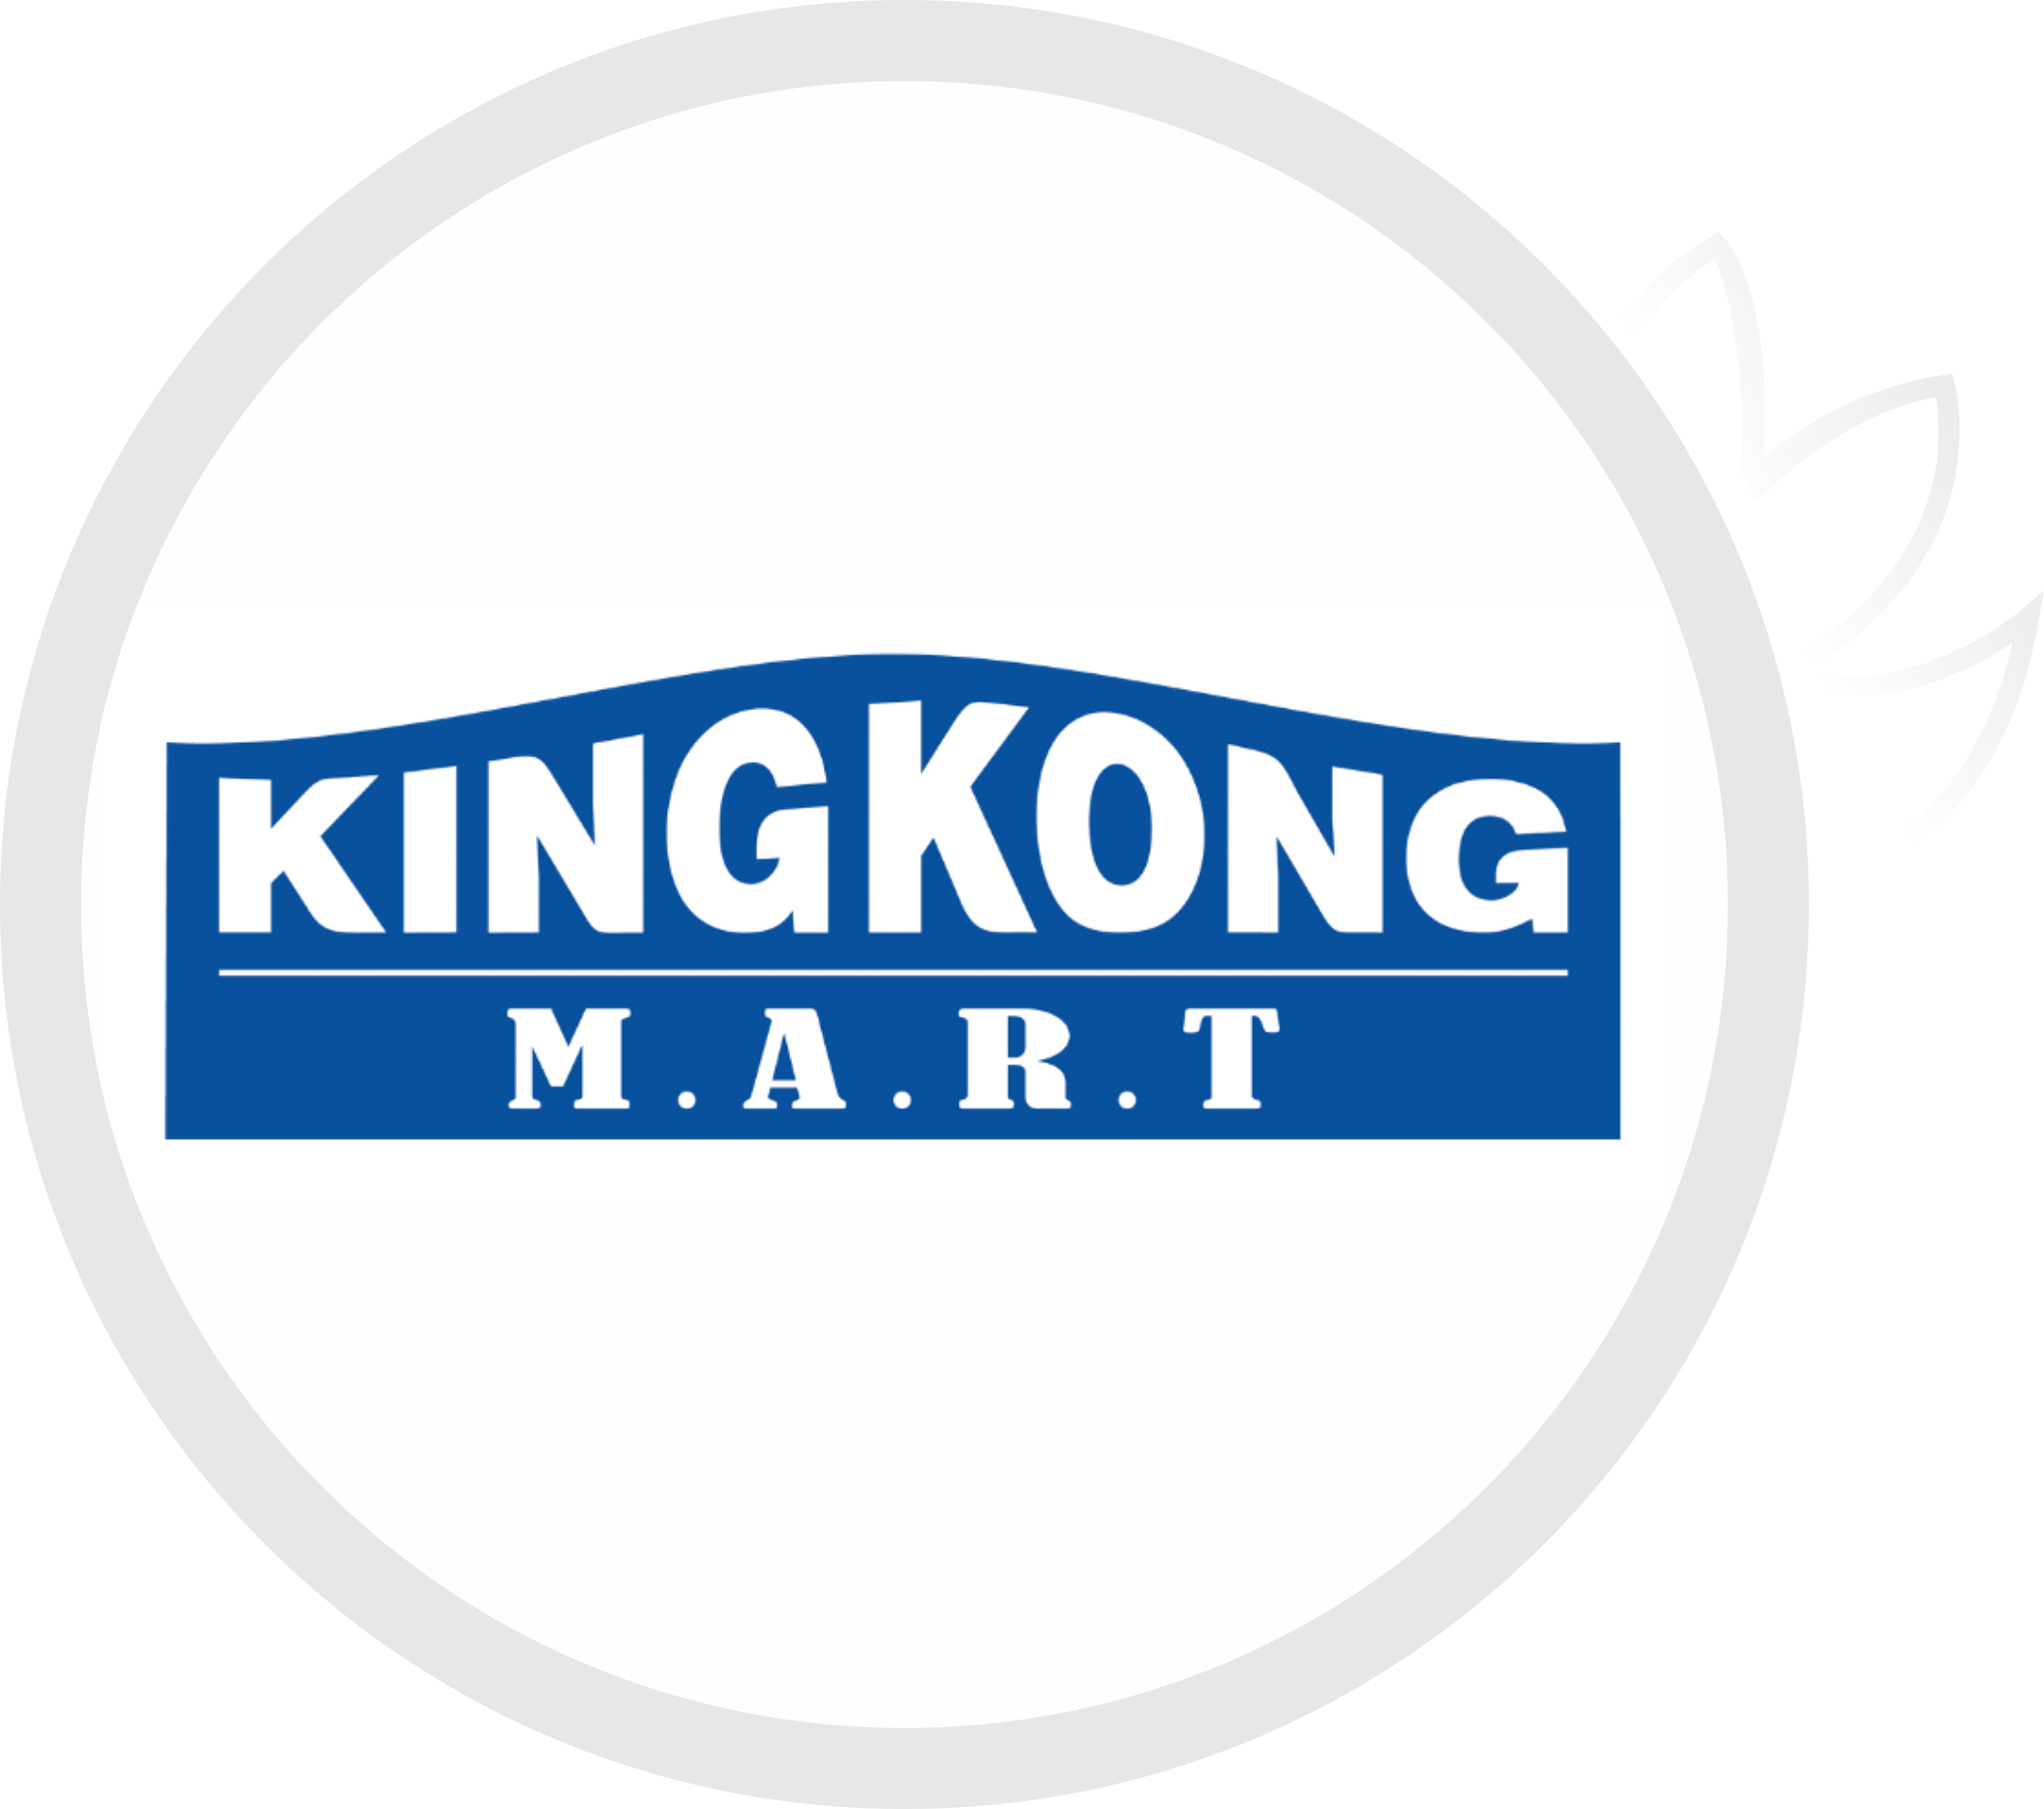 kingkong mart